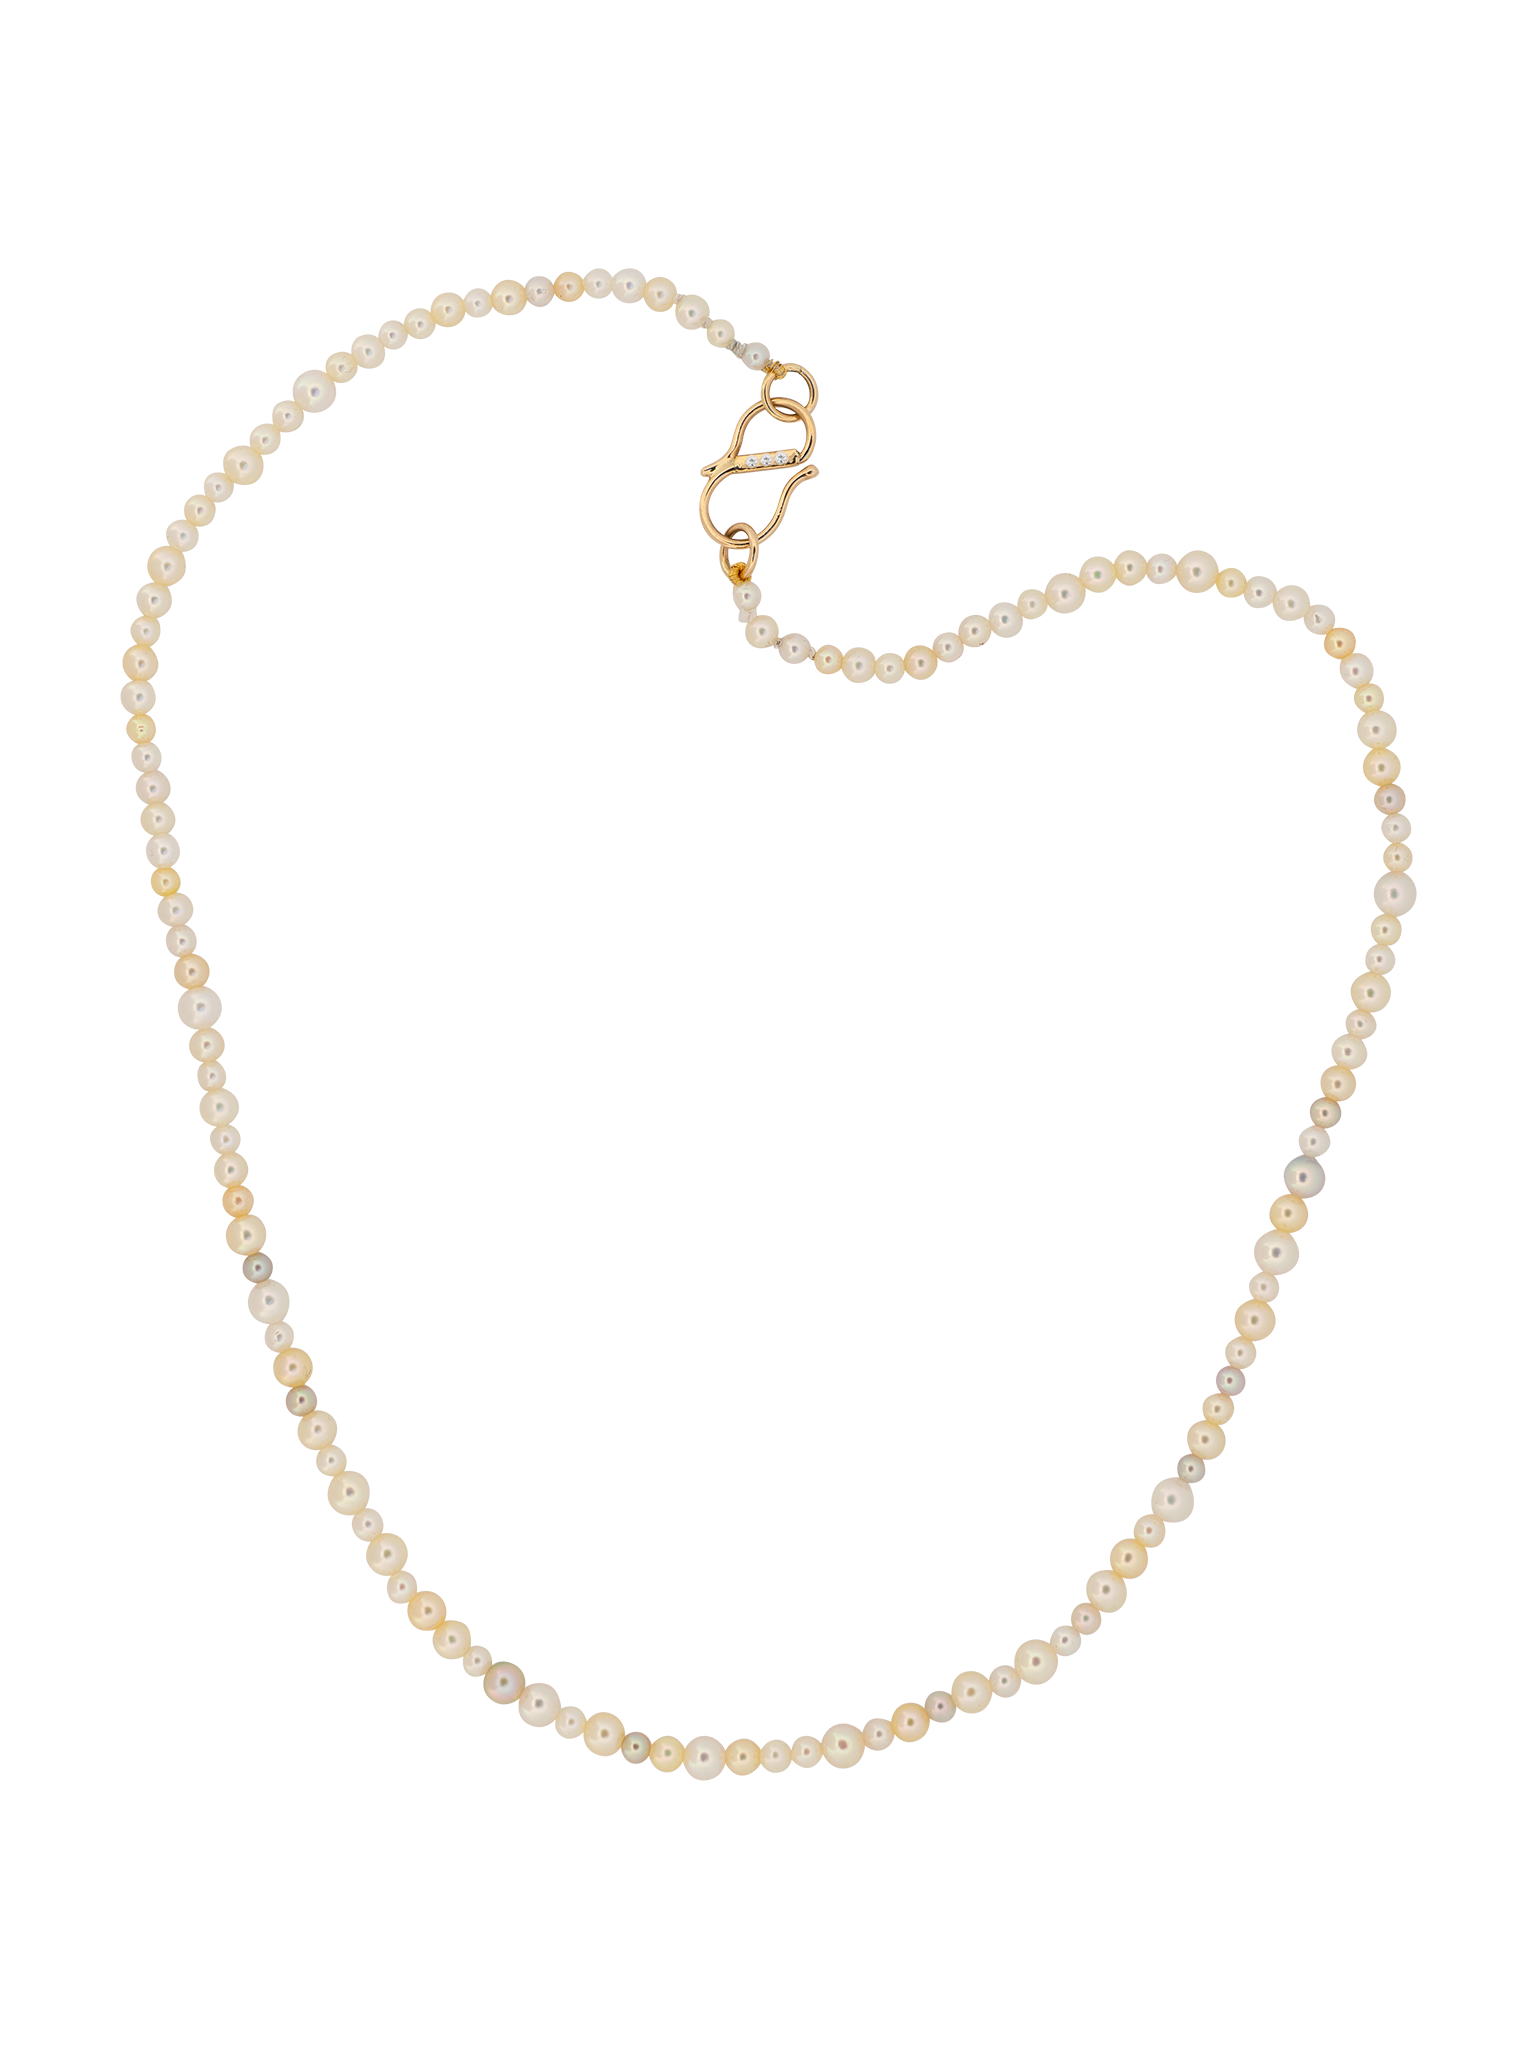 Akoya pearl necklace with diamond clasp photo 1